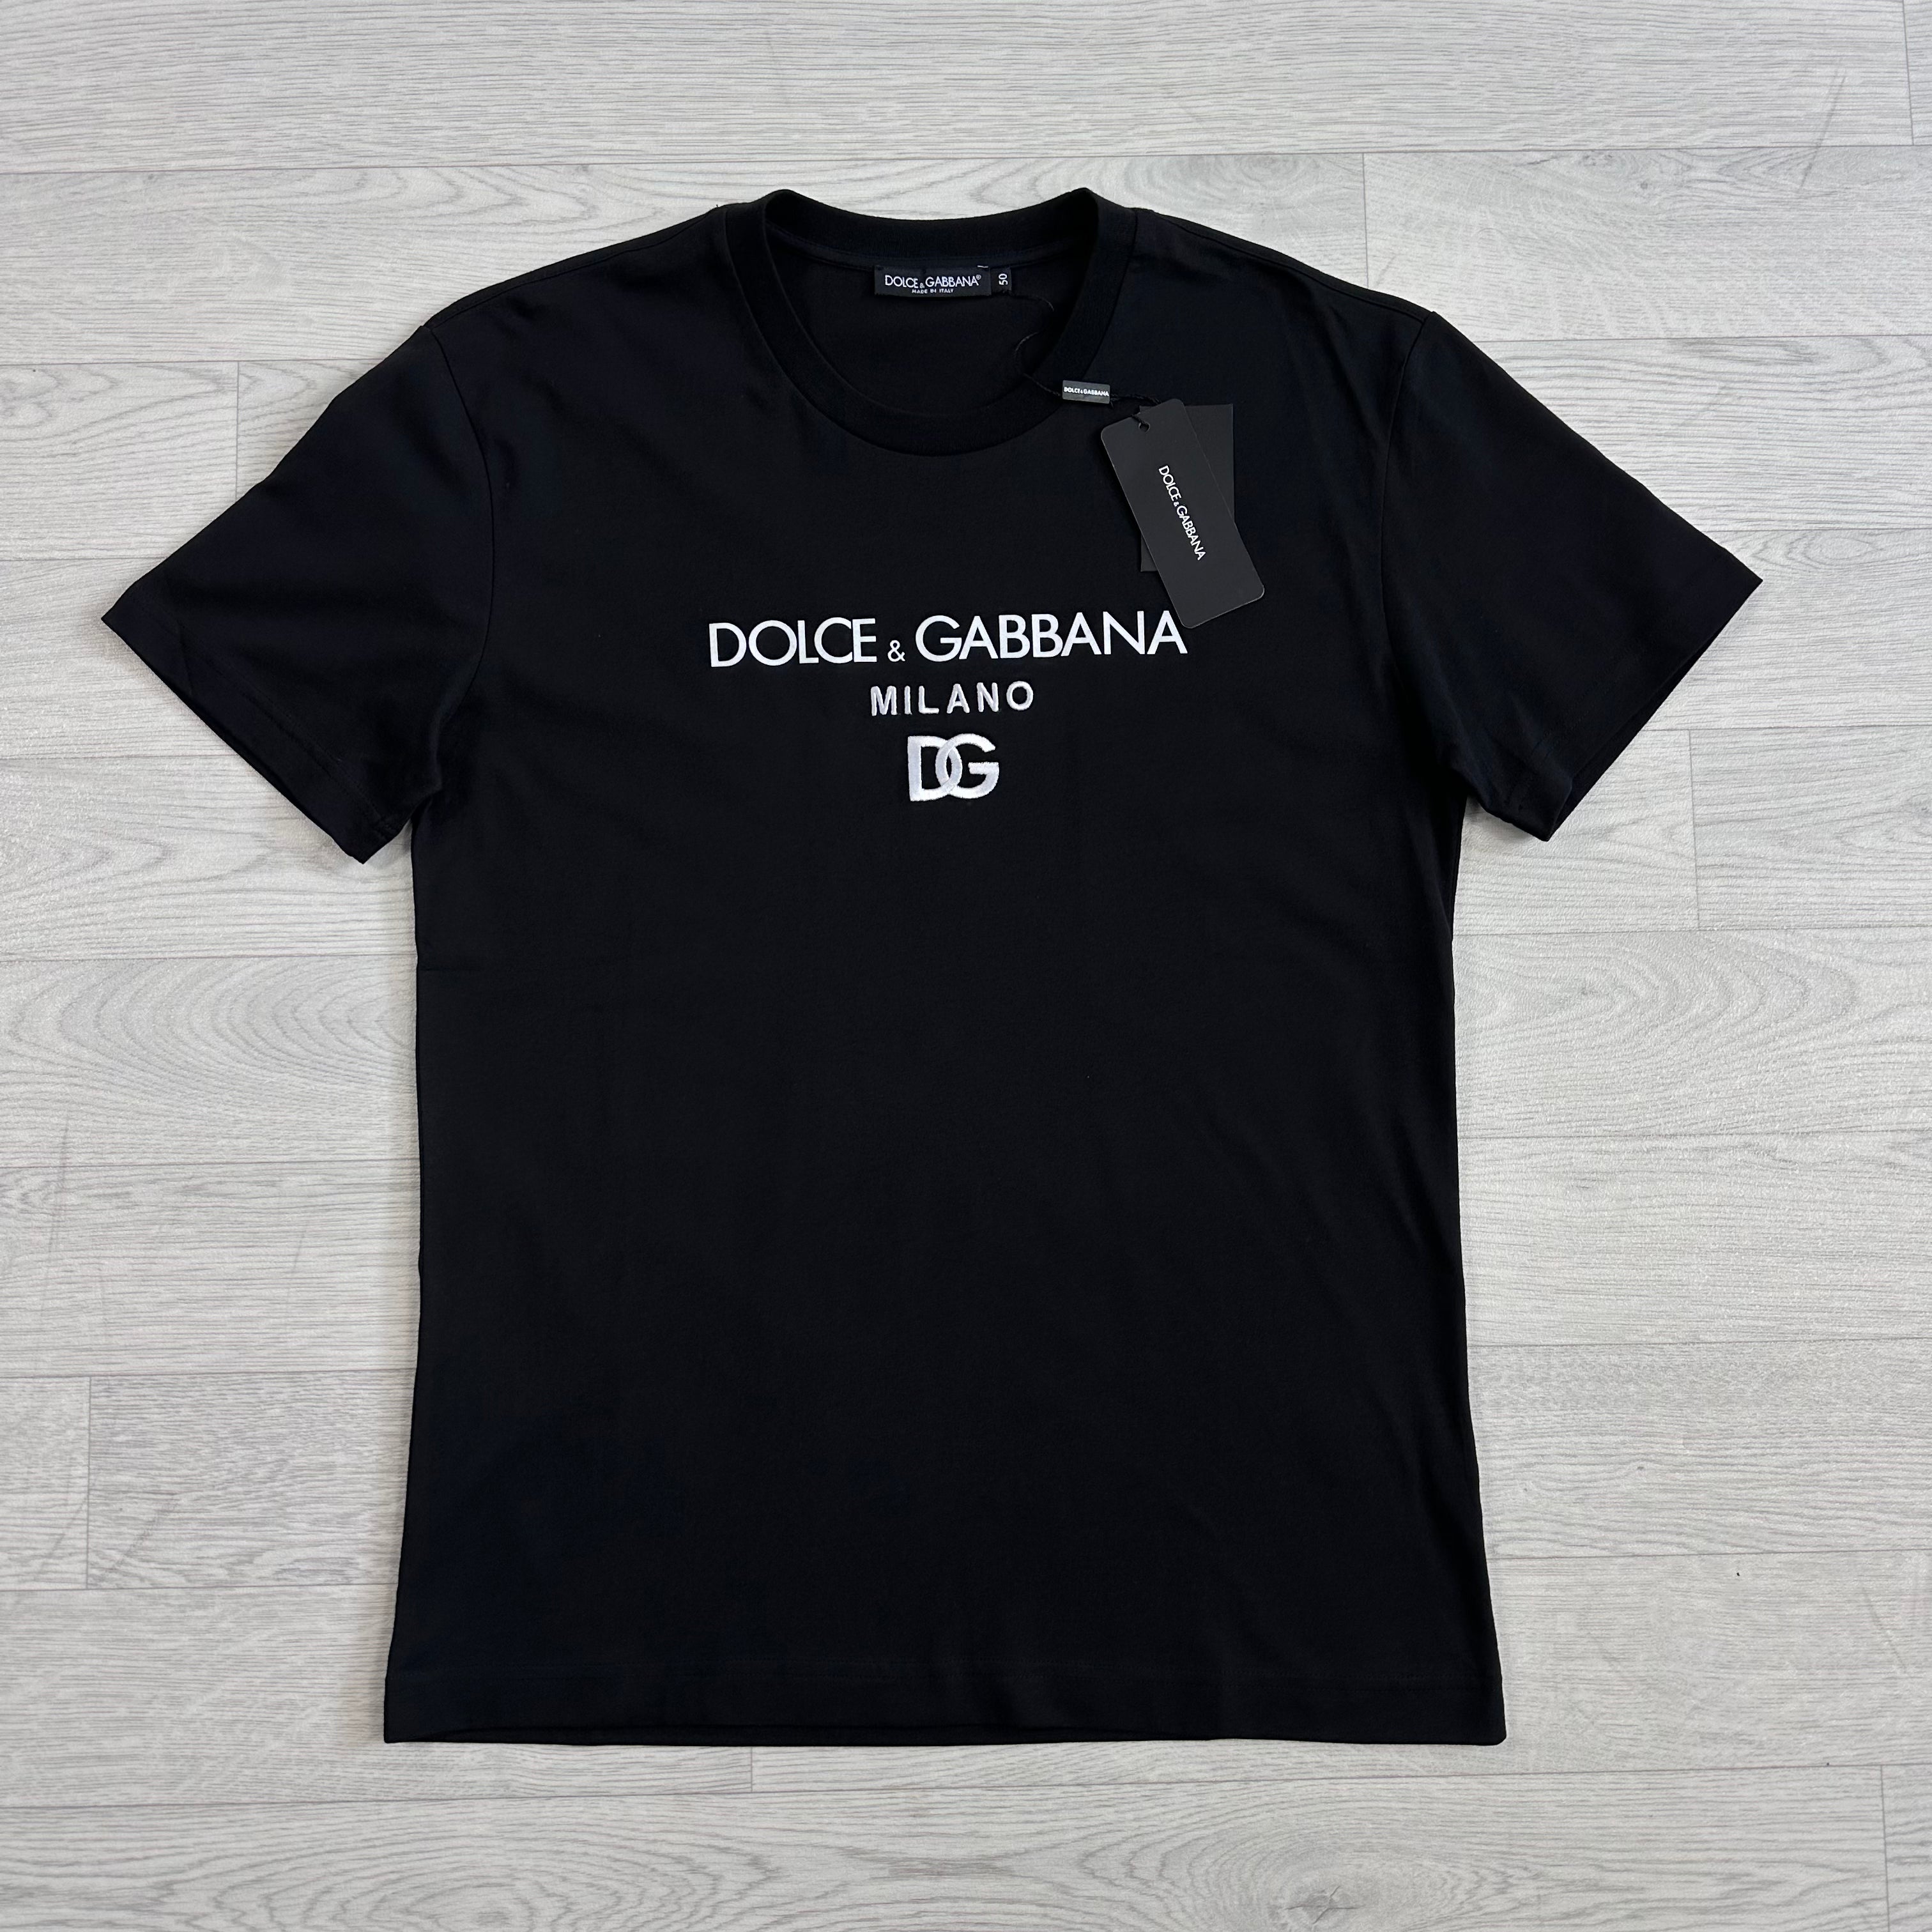 Milano T-shirt Black